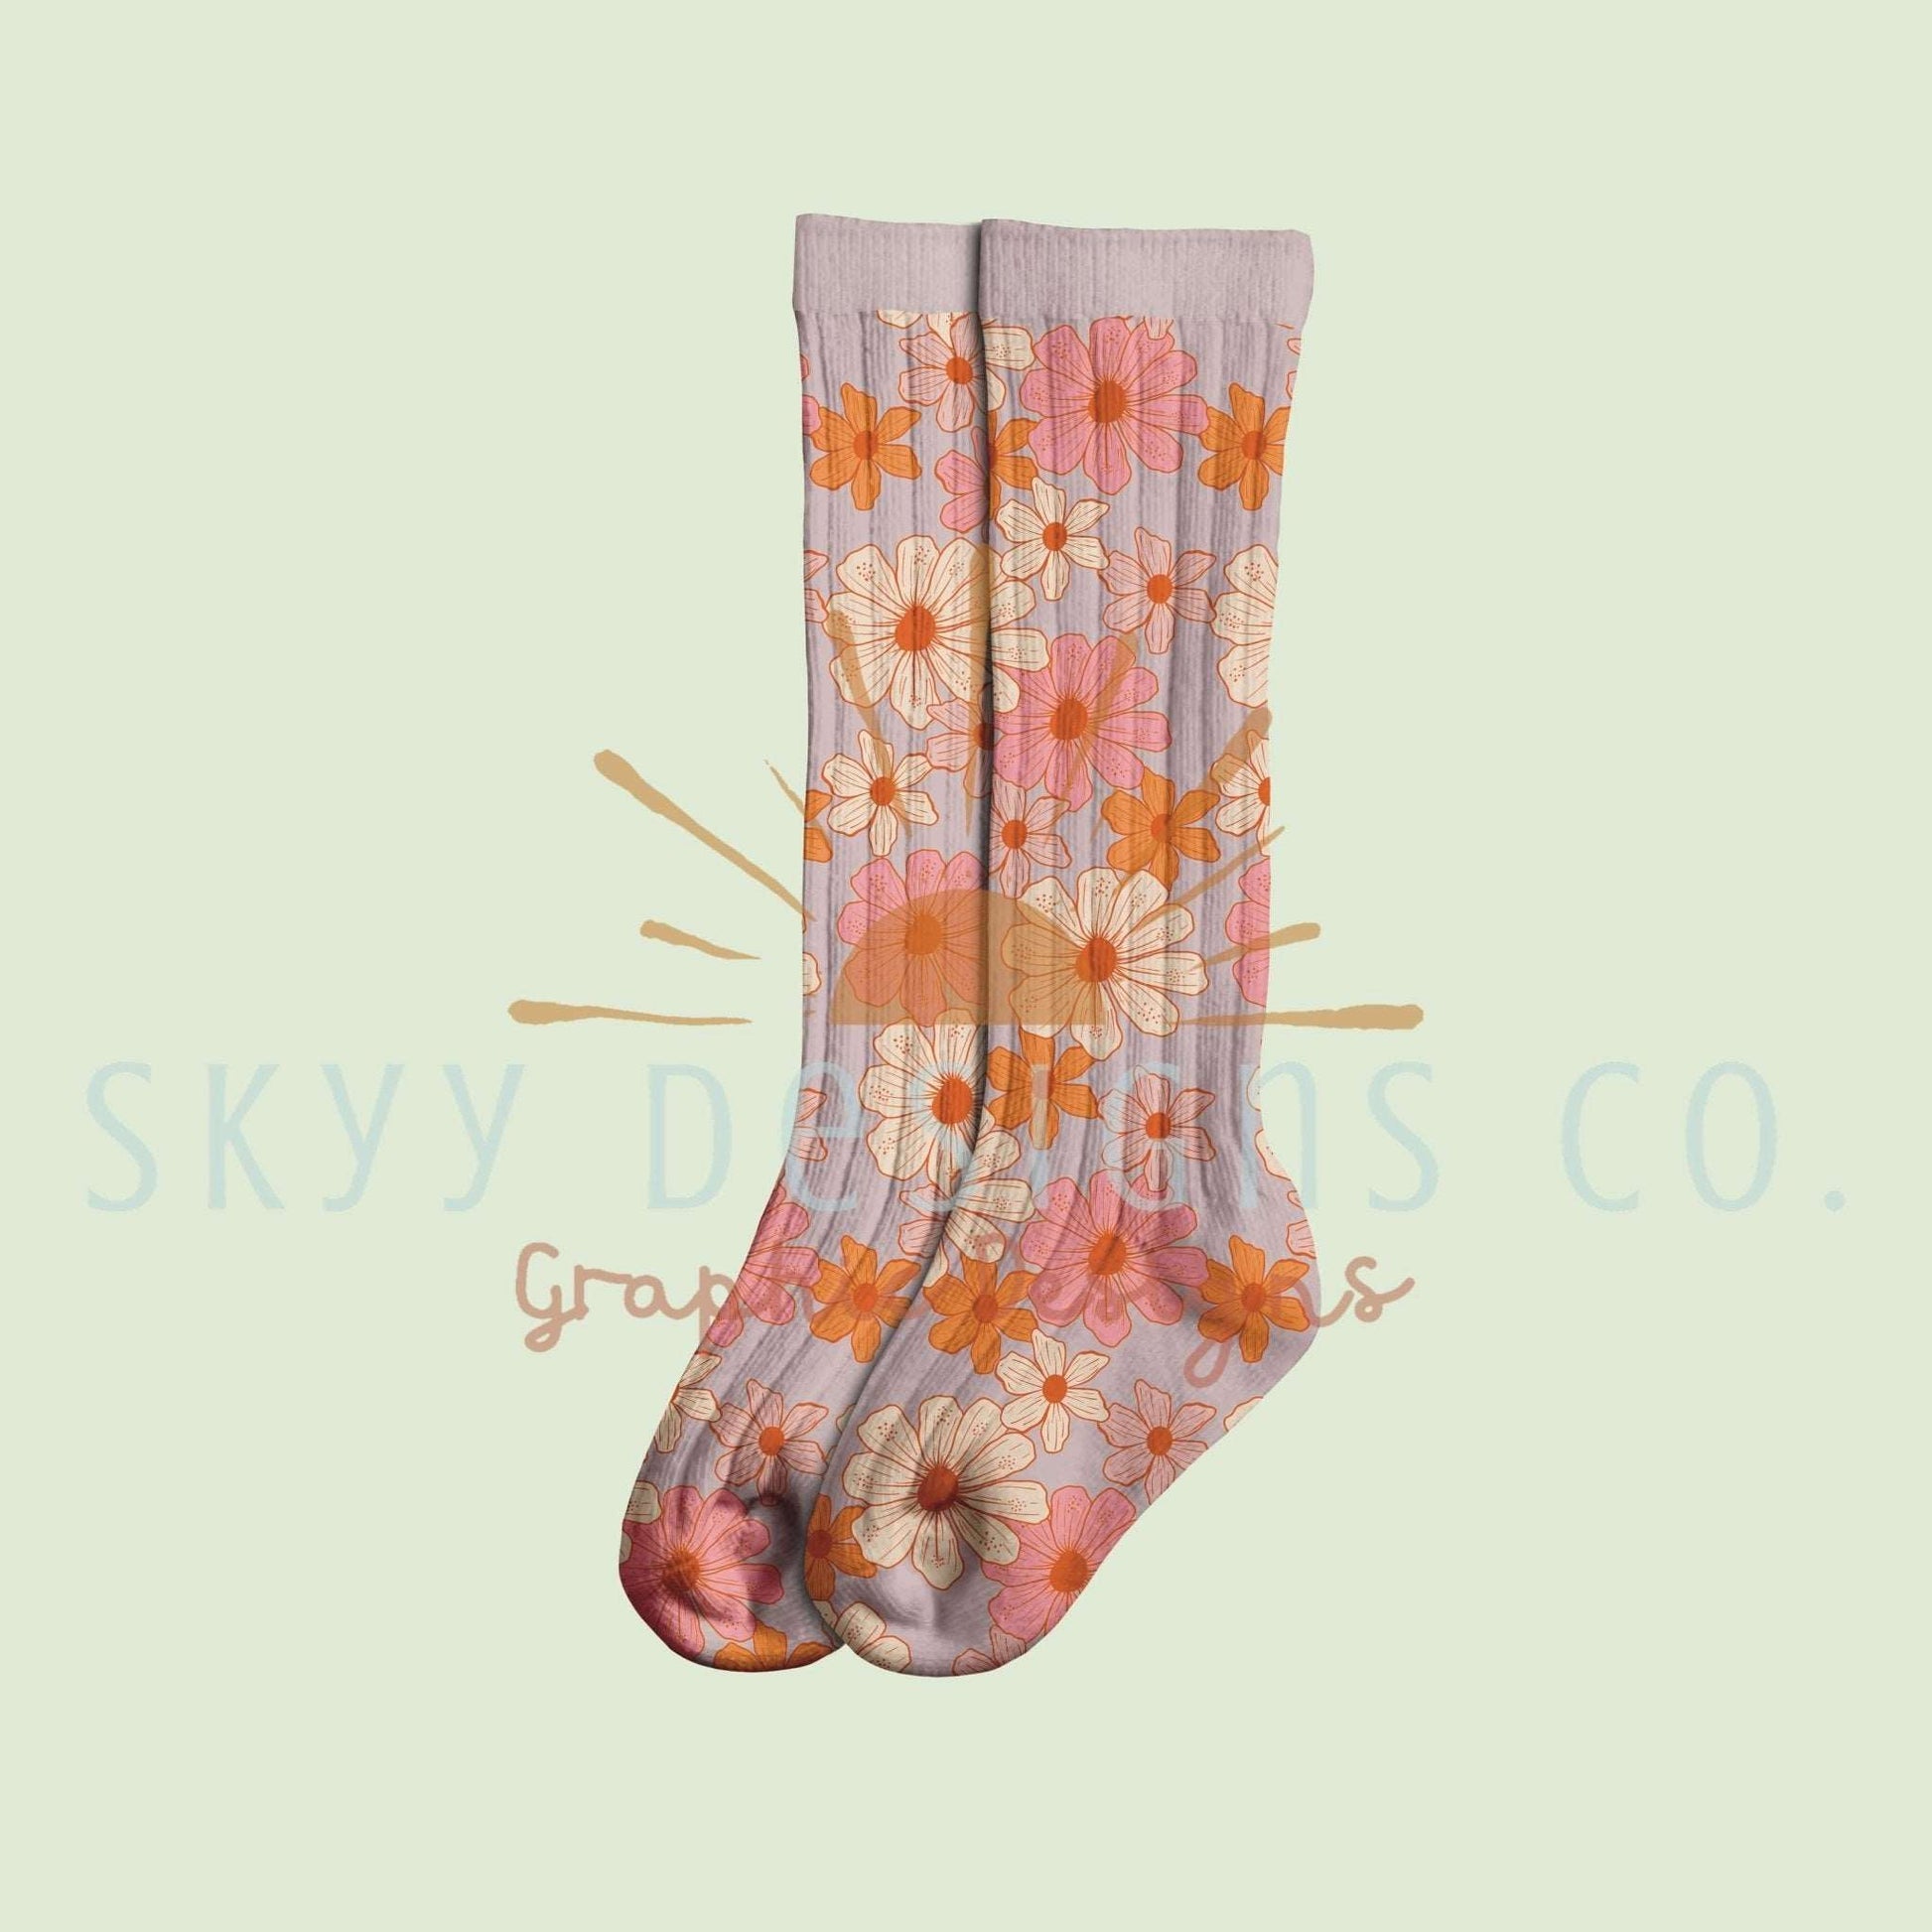 Knee high kids socks mock-up template - SkyyDesignsCo